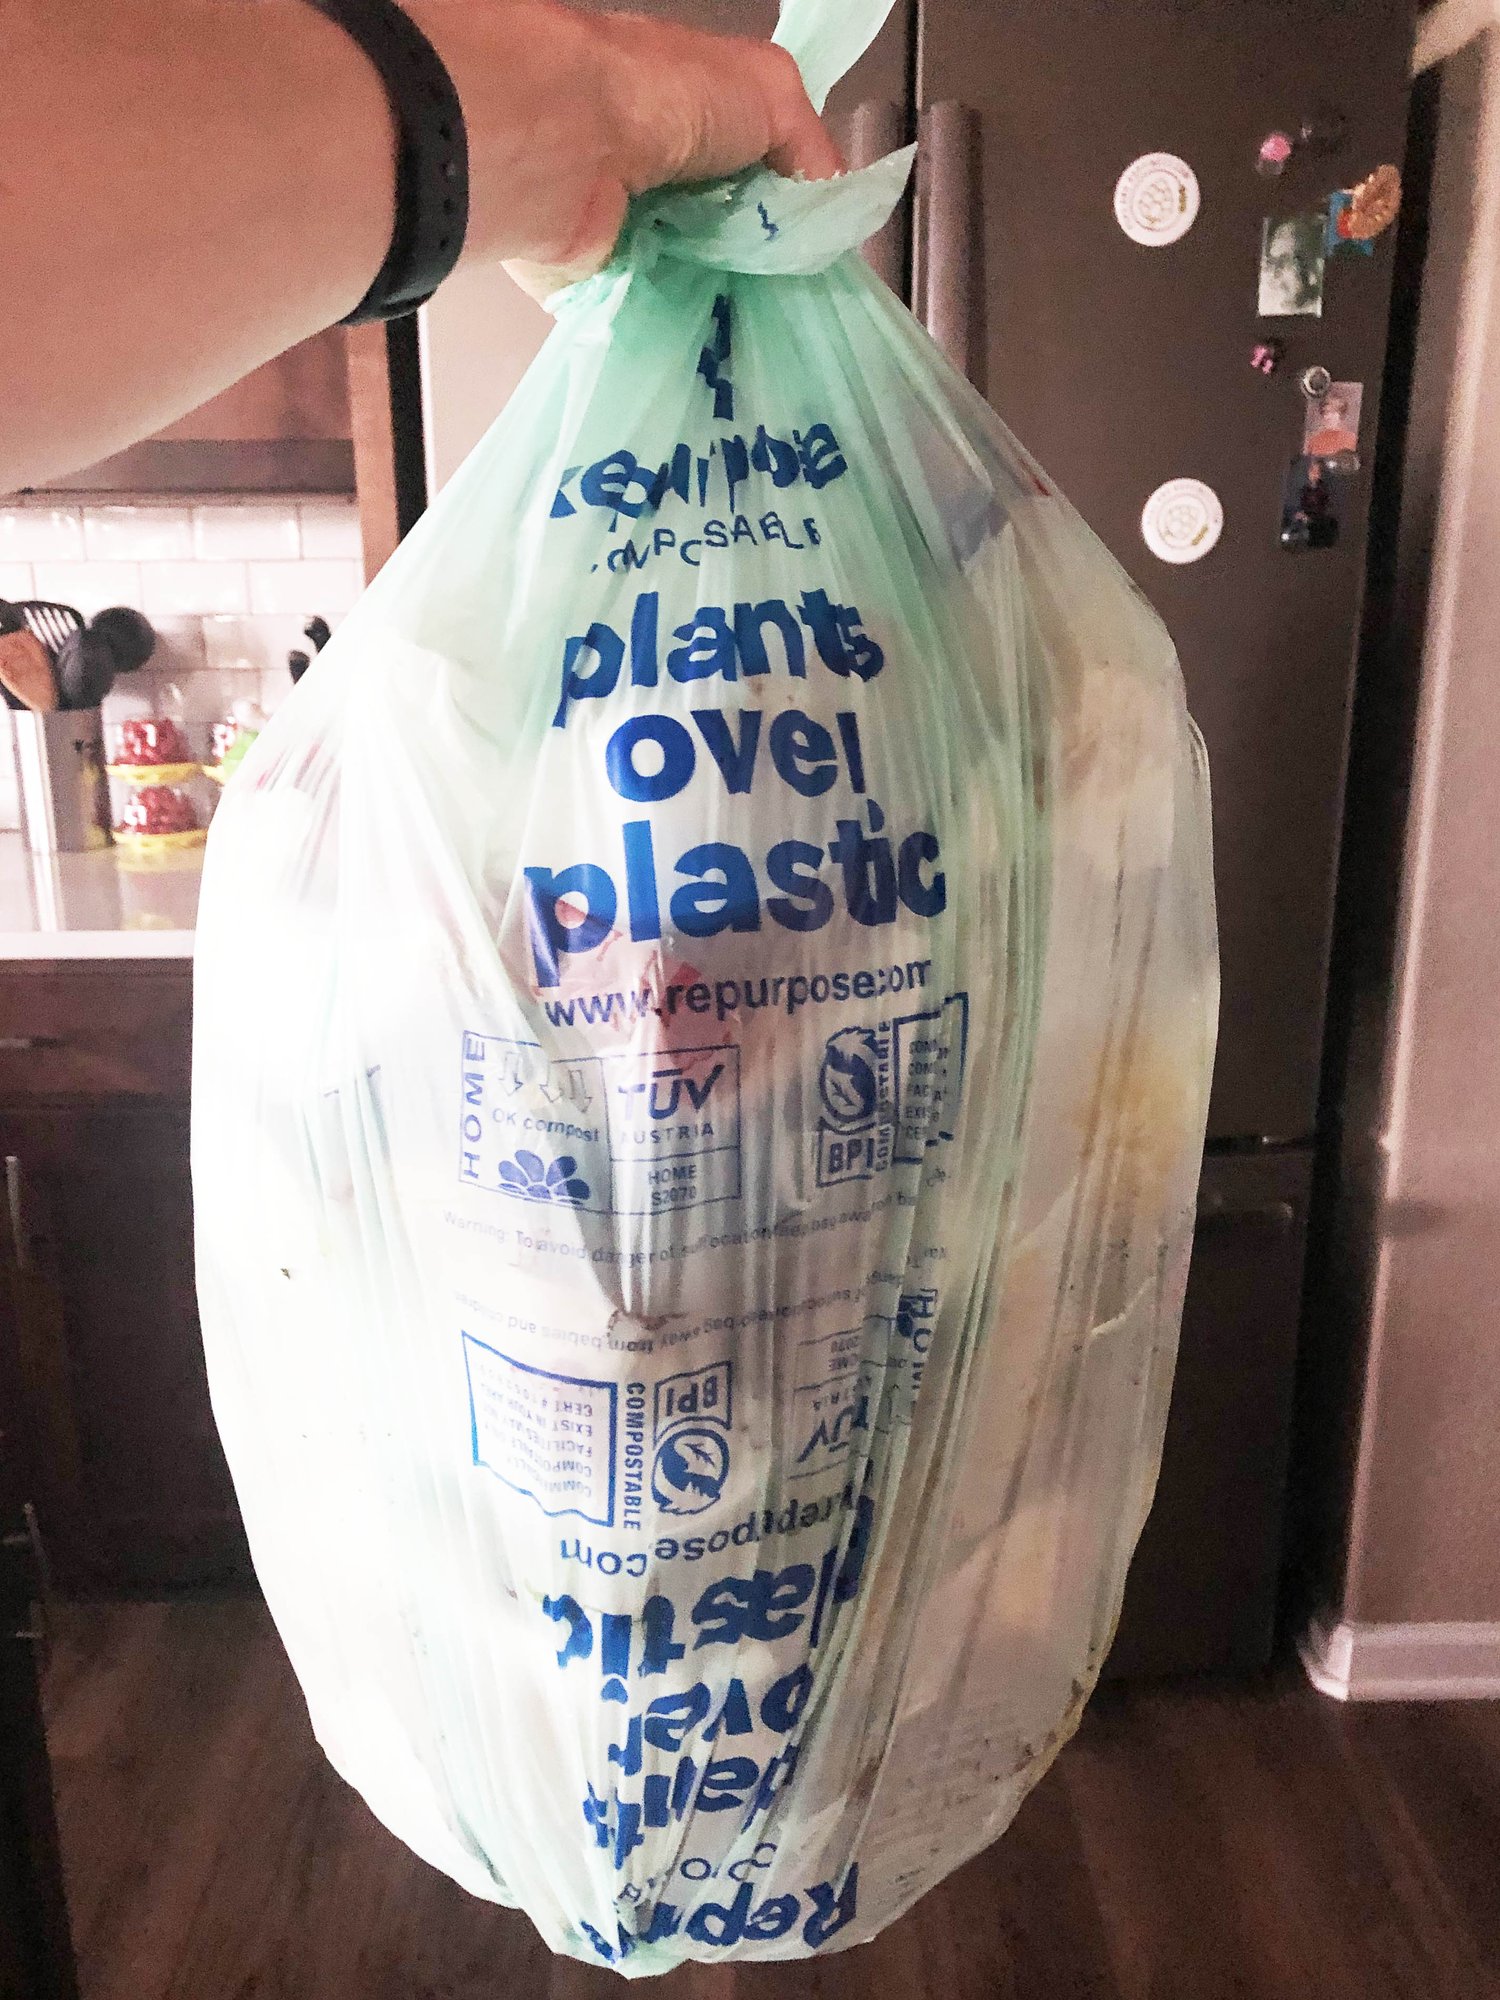 Woman's arm holding a trash bag full of trash; trash bag says "plants over plastic" on it